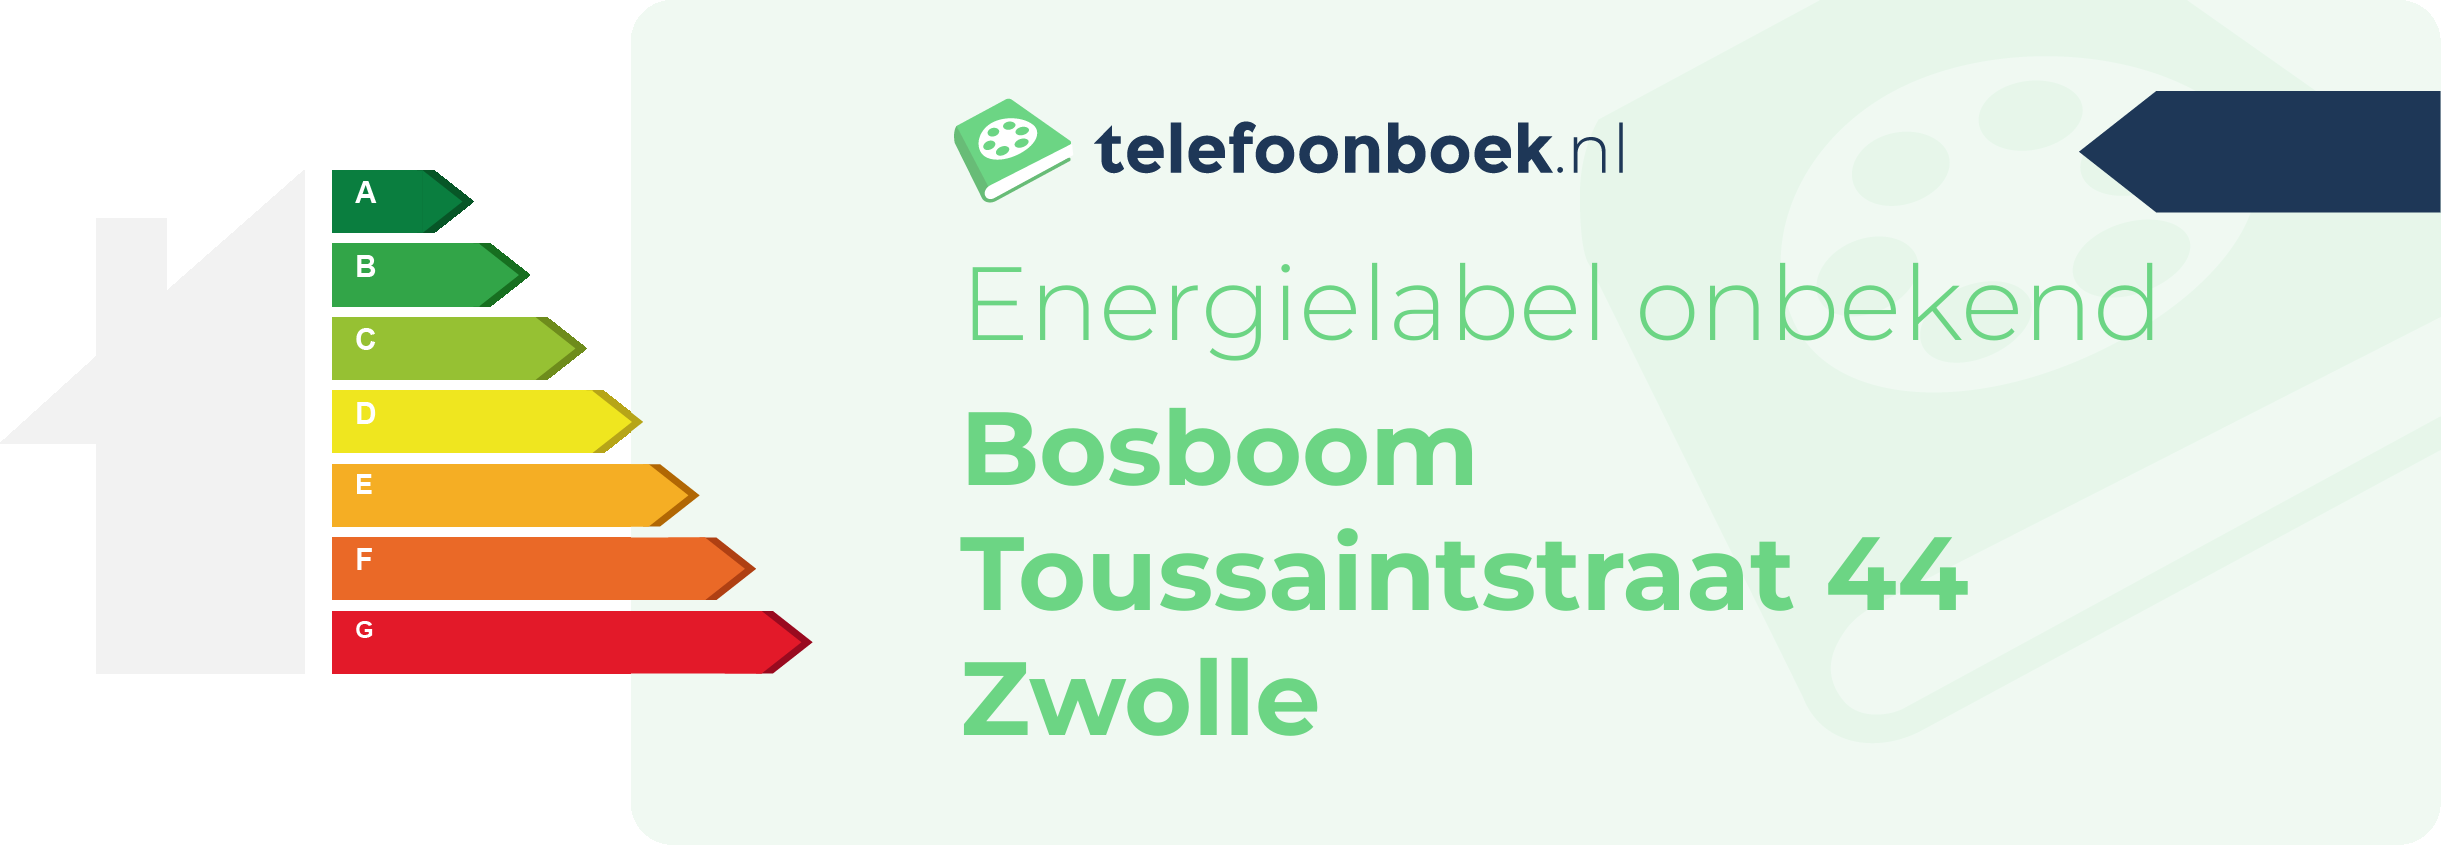 Energielabel Bosboom Toussaintstraat 44 Zwolle